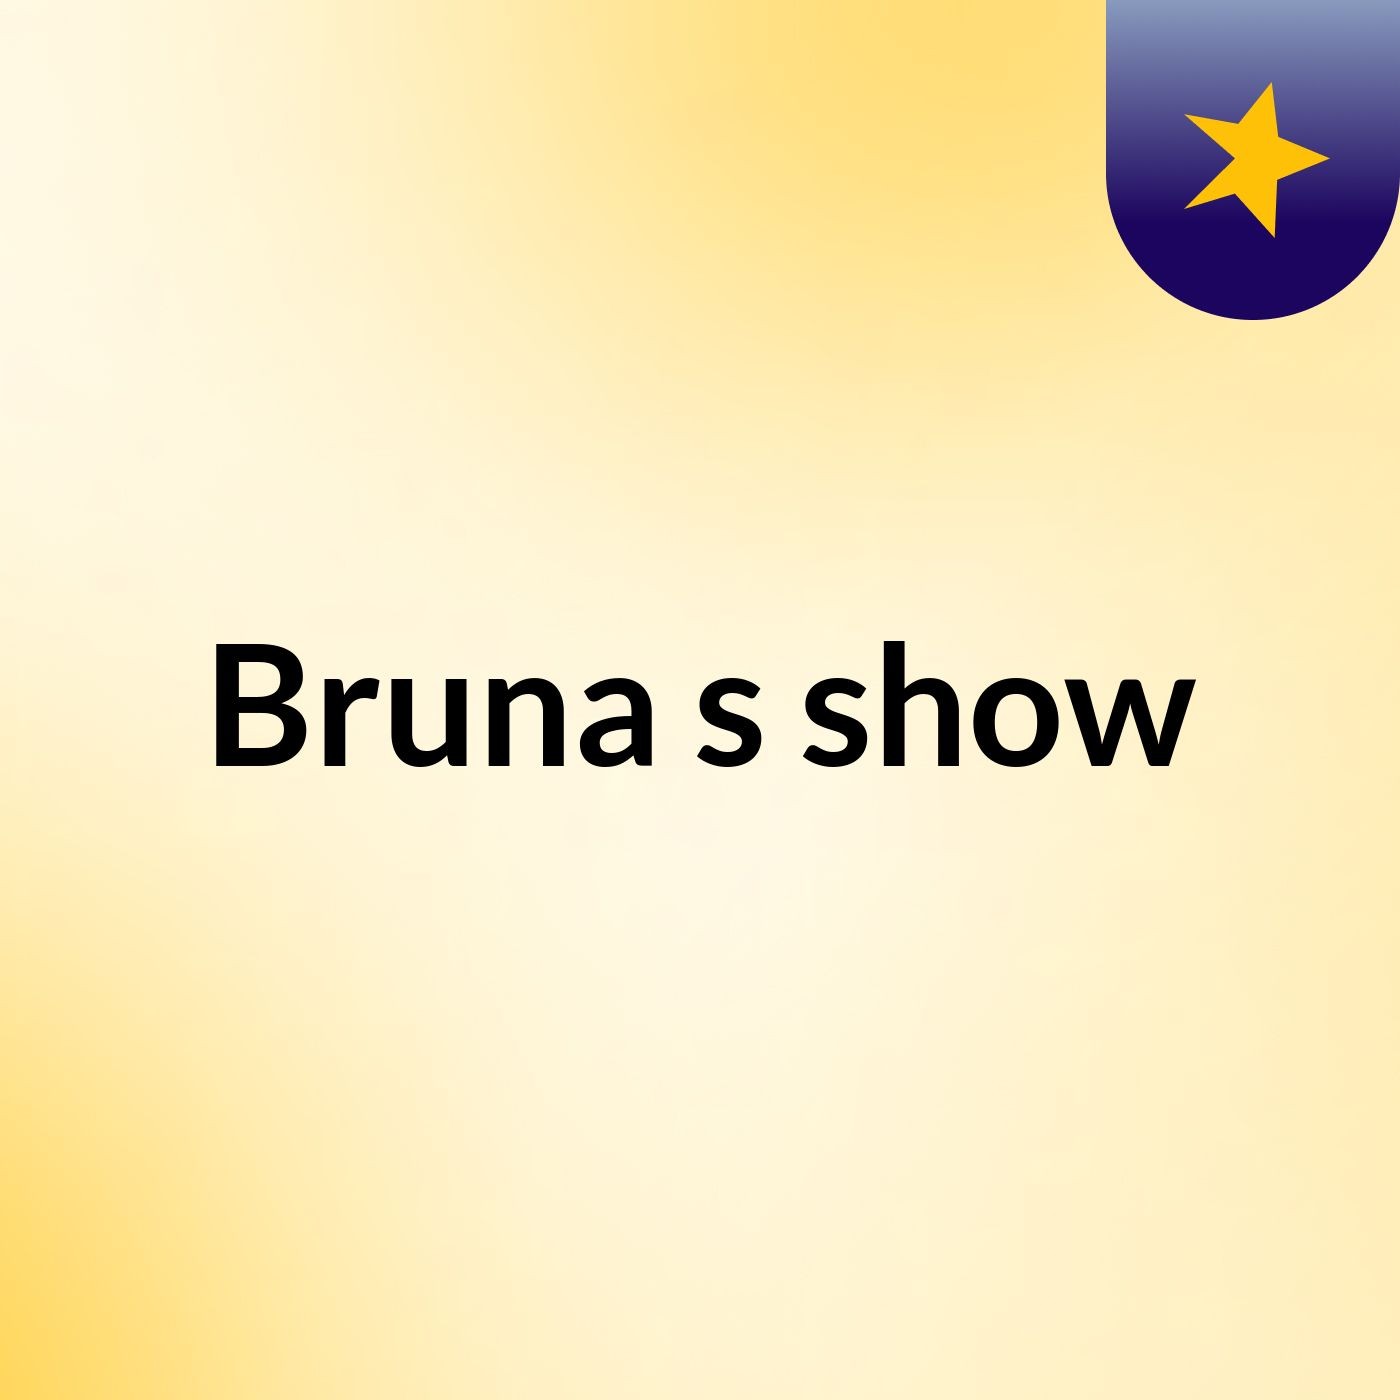 Bruna's show